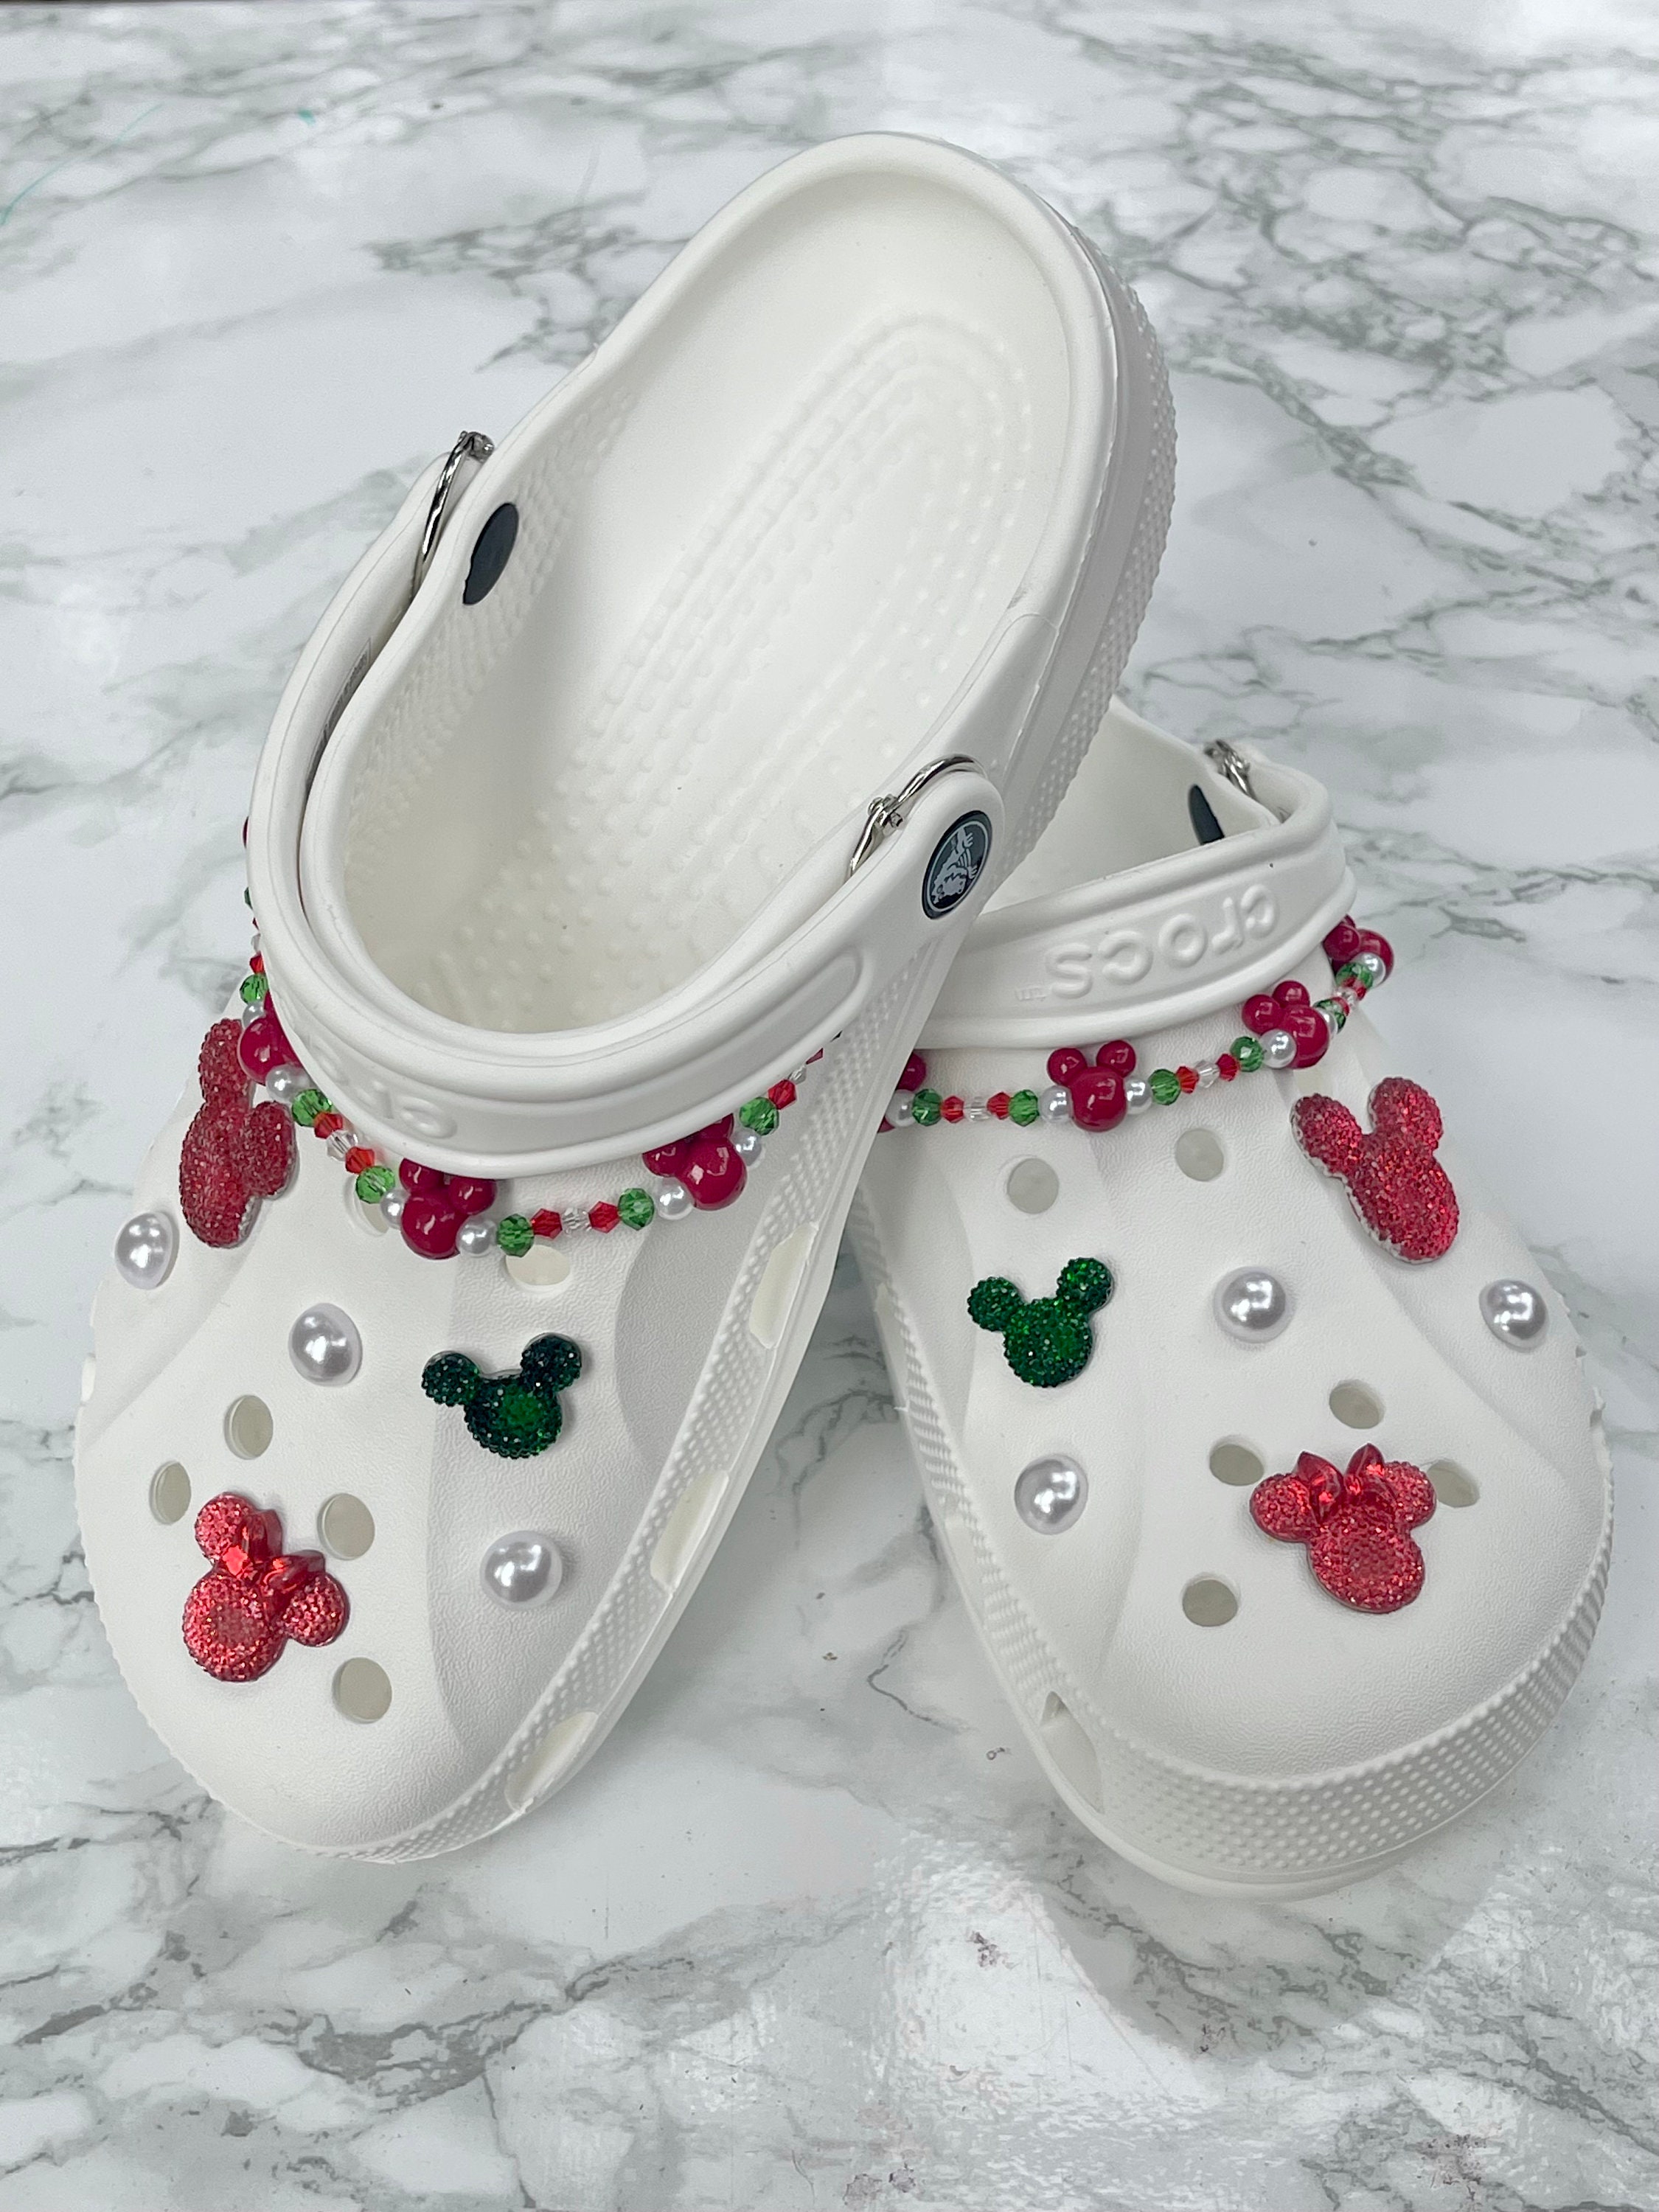 1pcs Bling Metal Croc Charm Luxury Gibits Snowflake Camellia Shoe